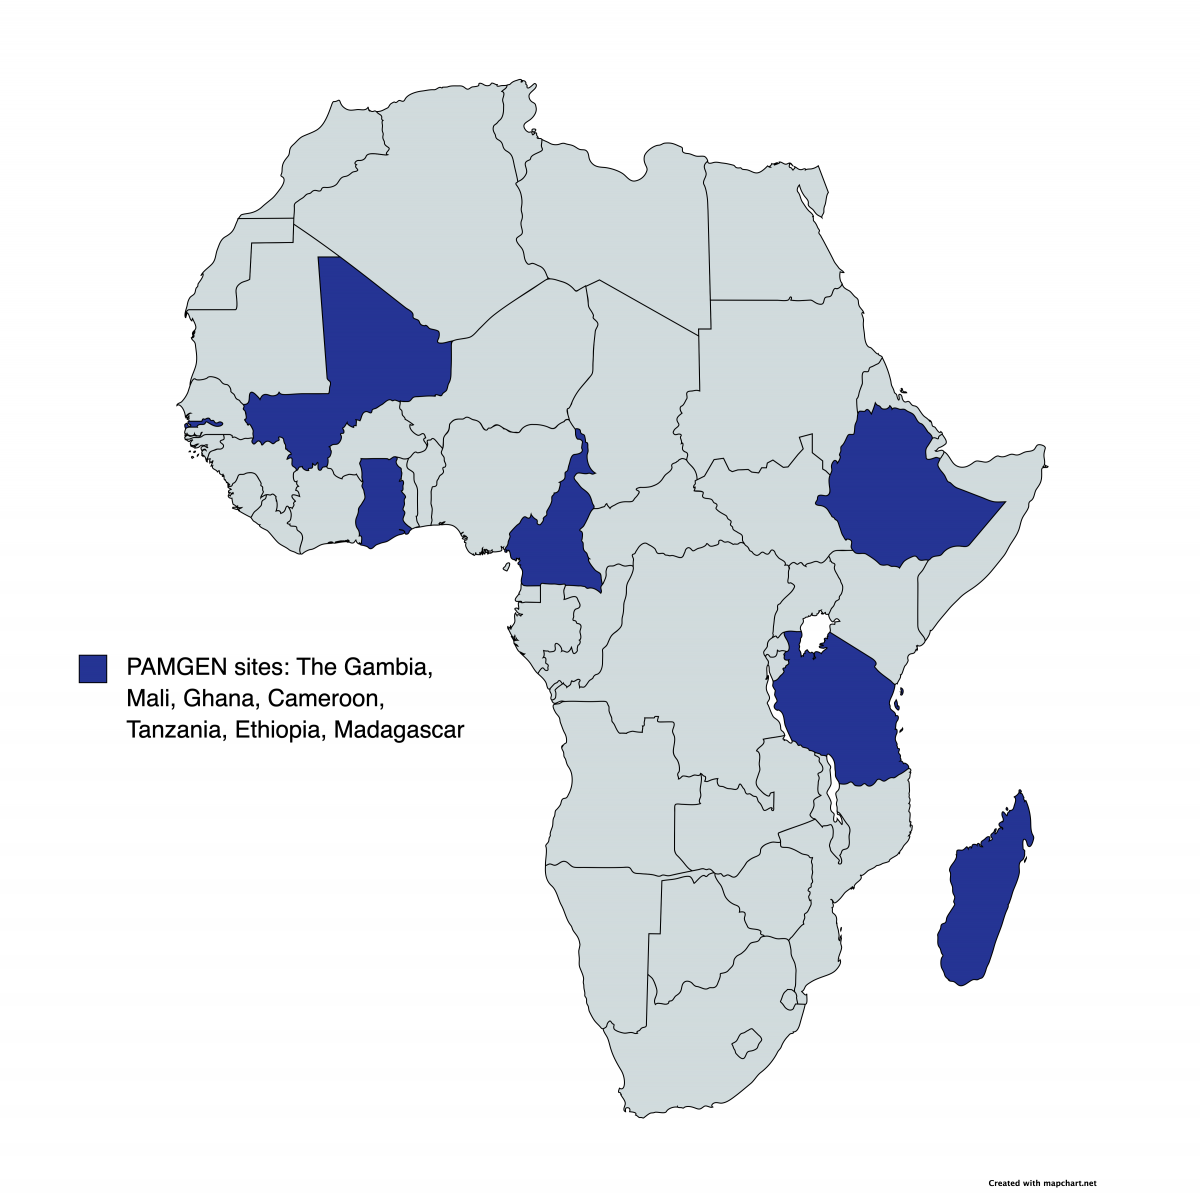 PAMGEN sites: The Gambia, Mali, Ghana, Cameroon, Tanzania, Ethiopia, Madagascar